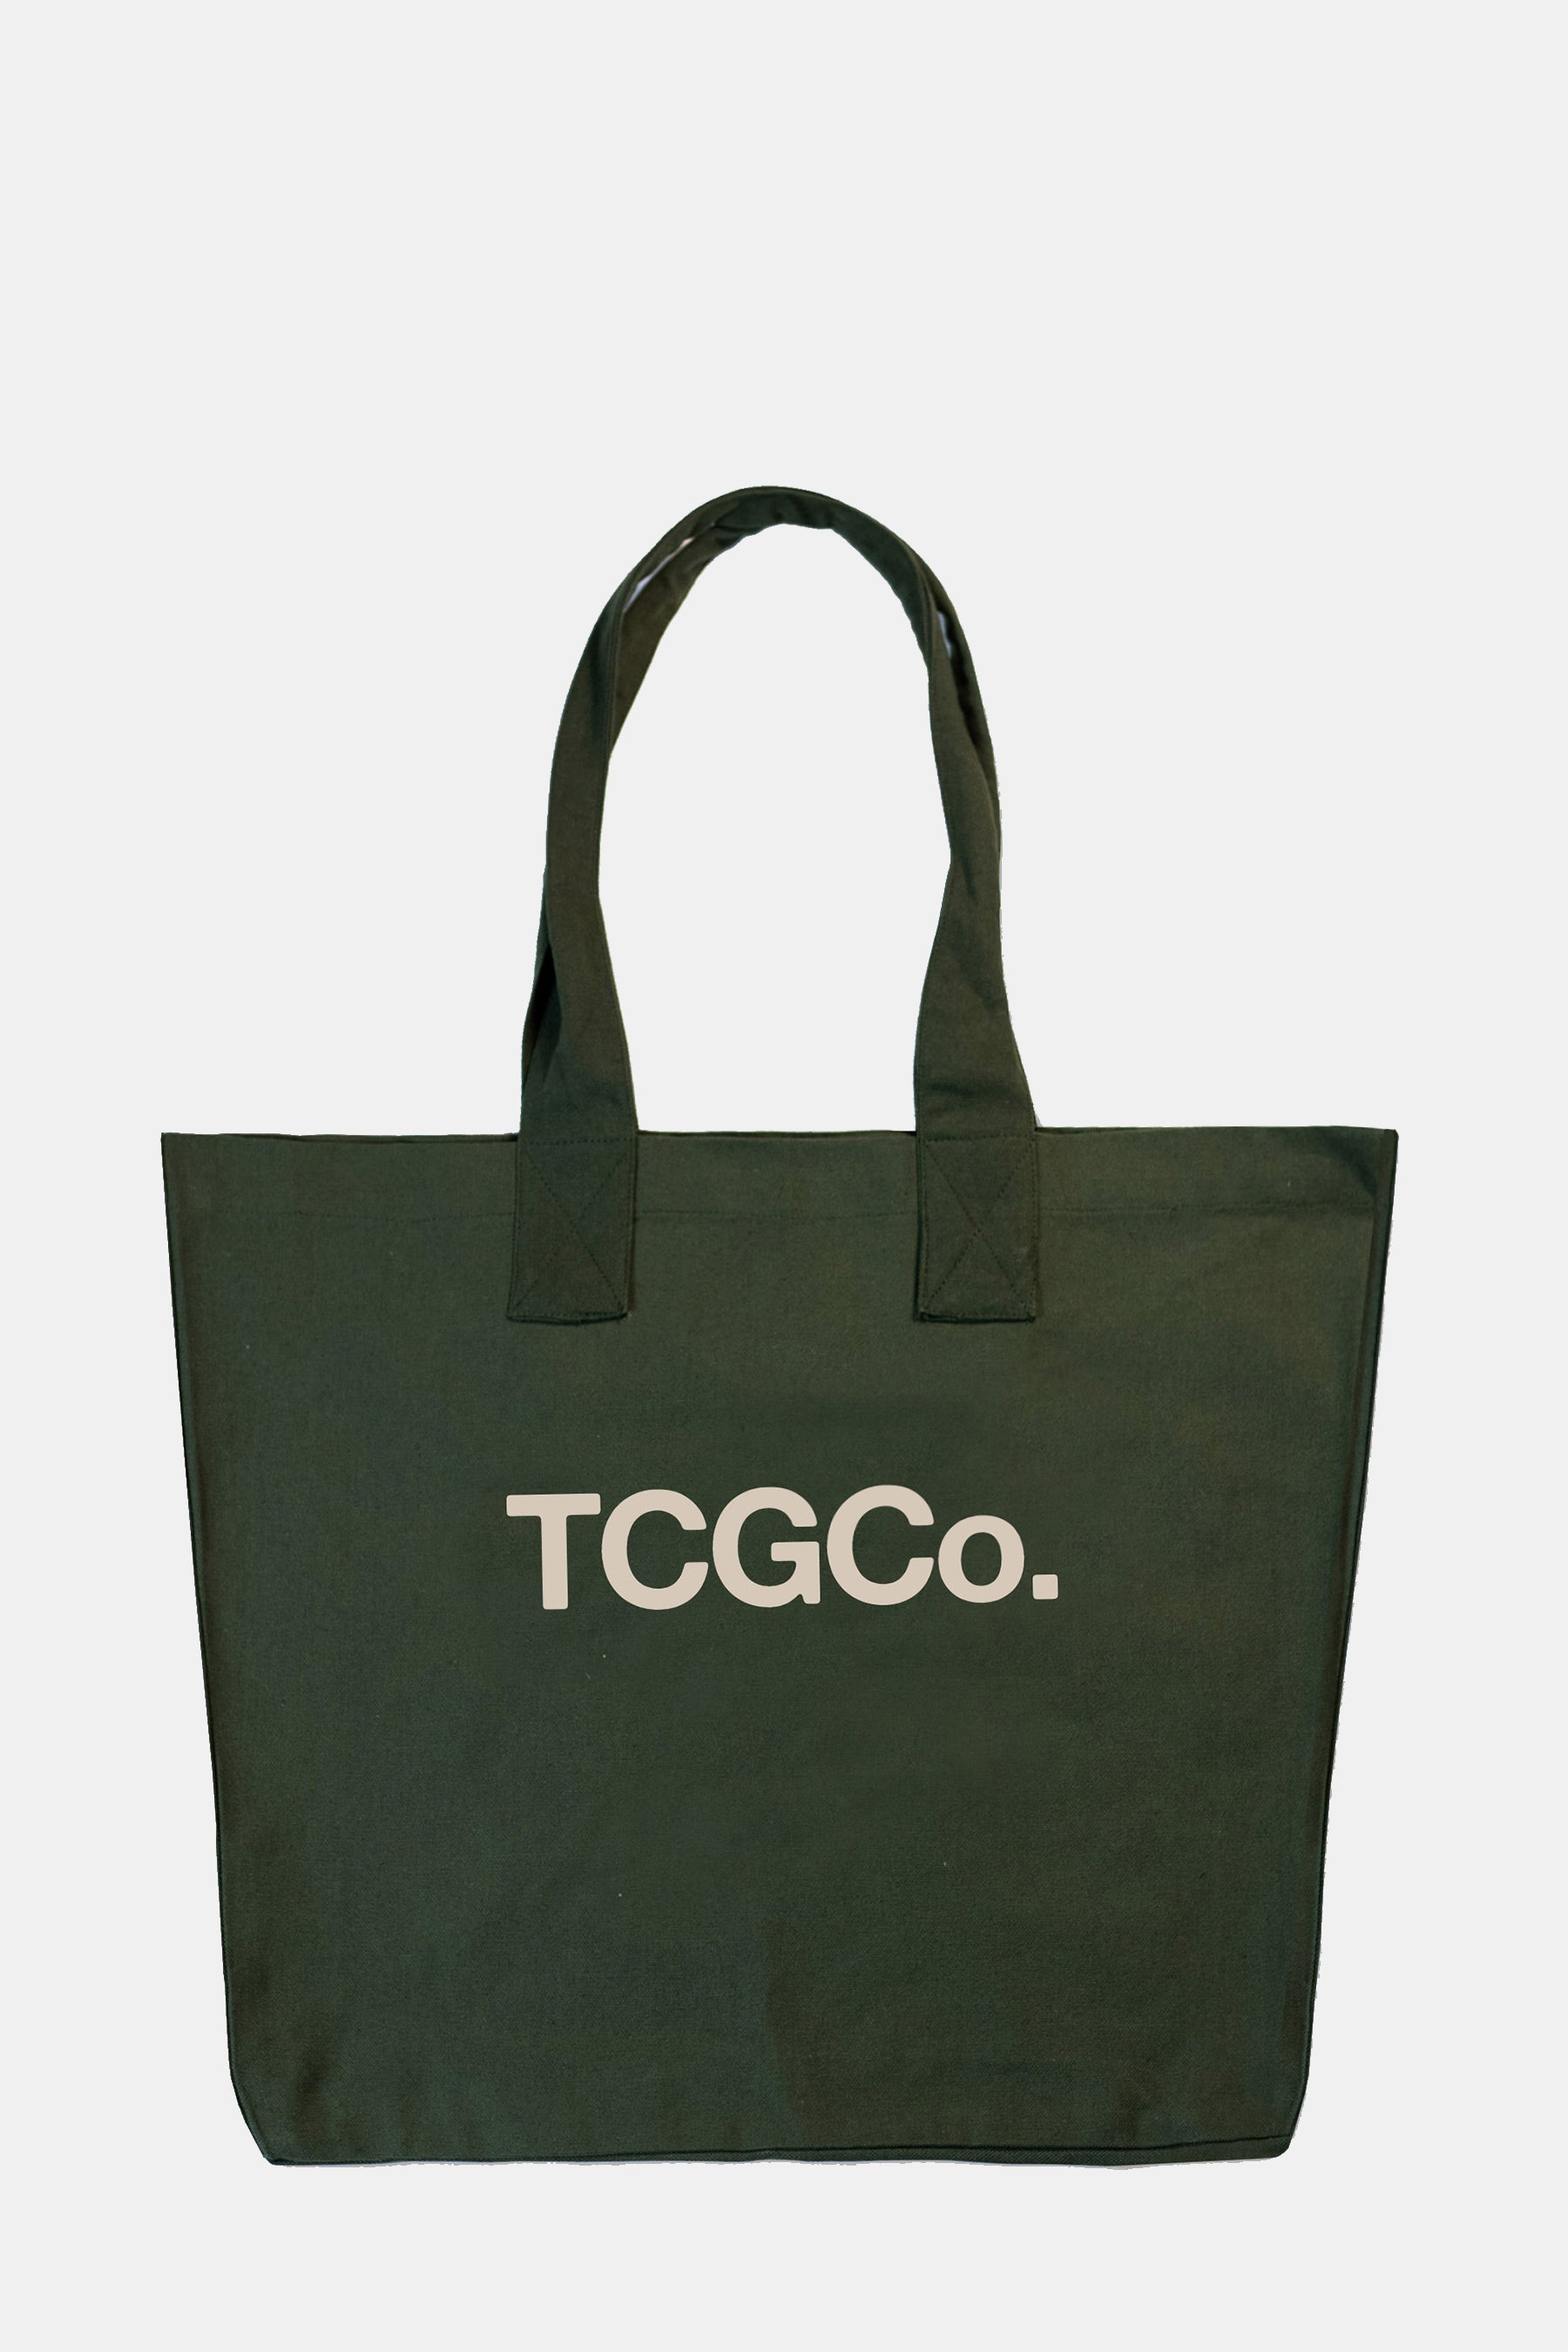 Tcgco-Natural 100% Recycled Cotton Market Tote - Tcgco Logo